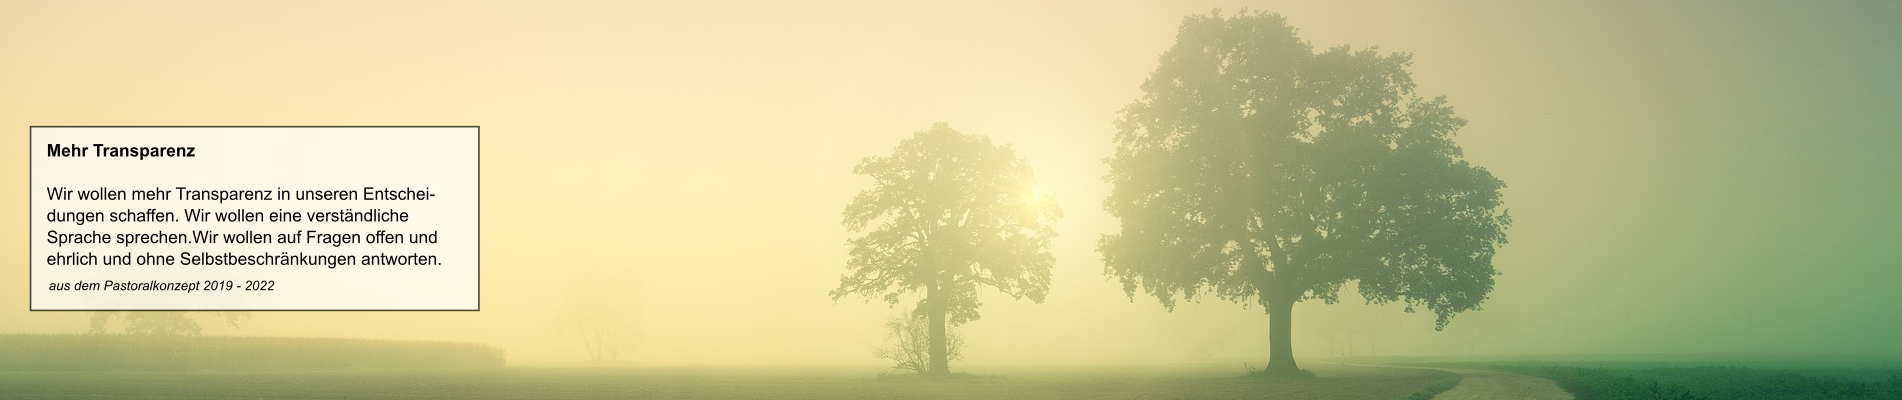 Nebel_1902_2_Transparenz